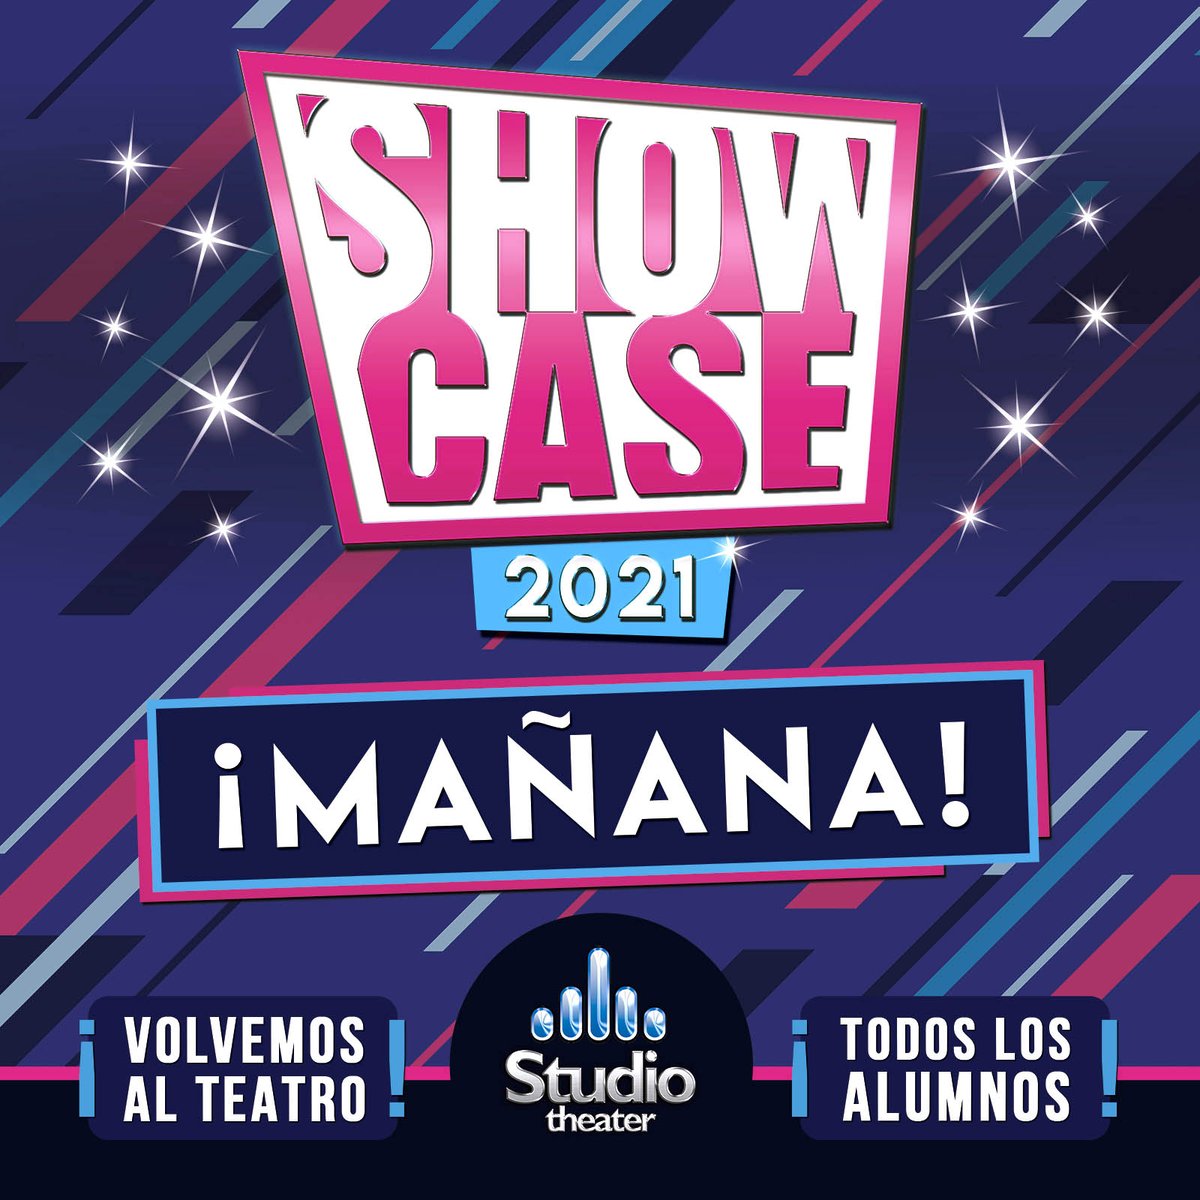 Mañana! Volvemos al teatro!! #Showcase2021
#TodosLosAlumnos #StudioTheater 15 y 18hs!!
Últimas entradas en venta!! Te esperamos!
comediamusicalcordoba.com